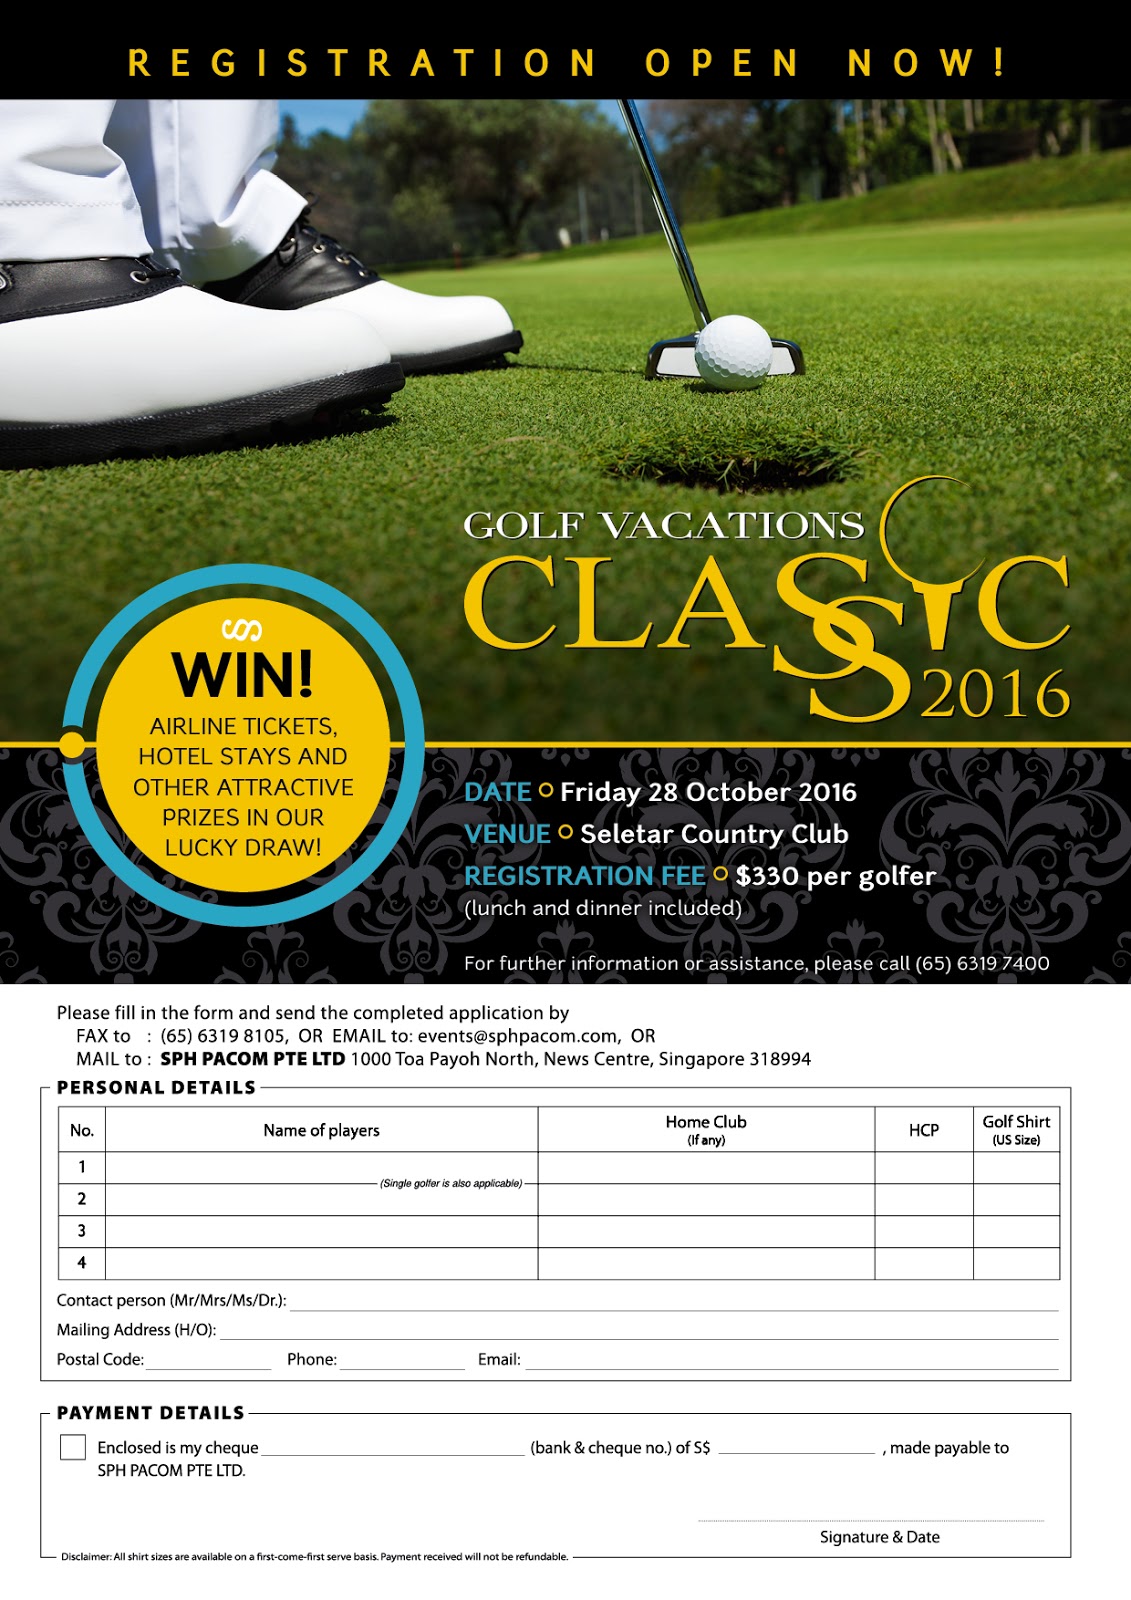 http://golfvacations.com.sg/wp-content/uploads/2016/08/GV_Classic_Registration2016.pdf